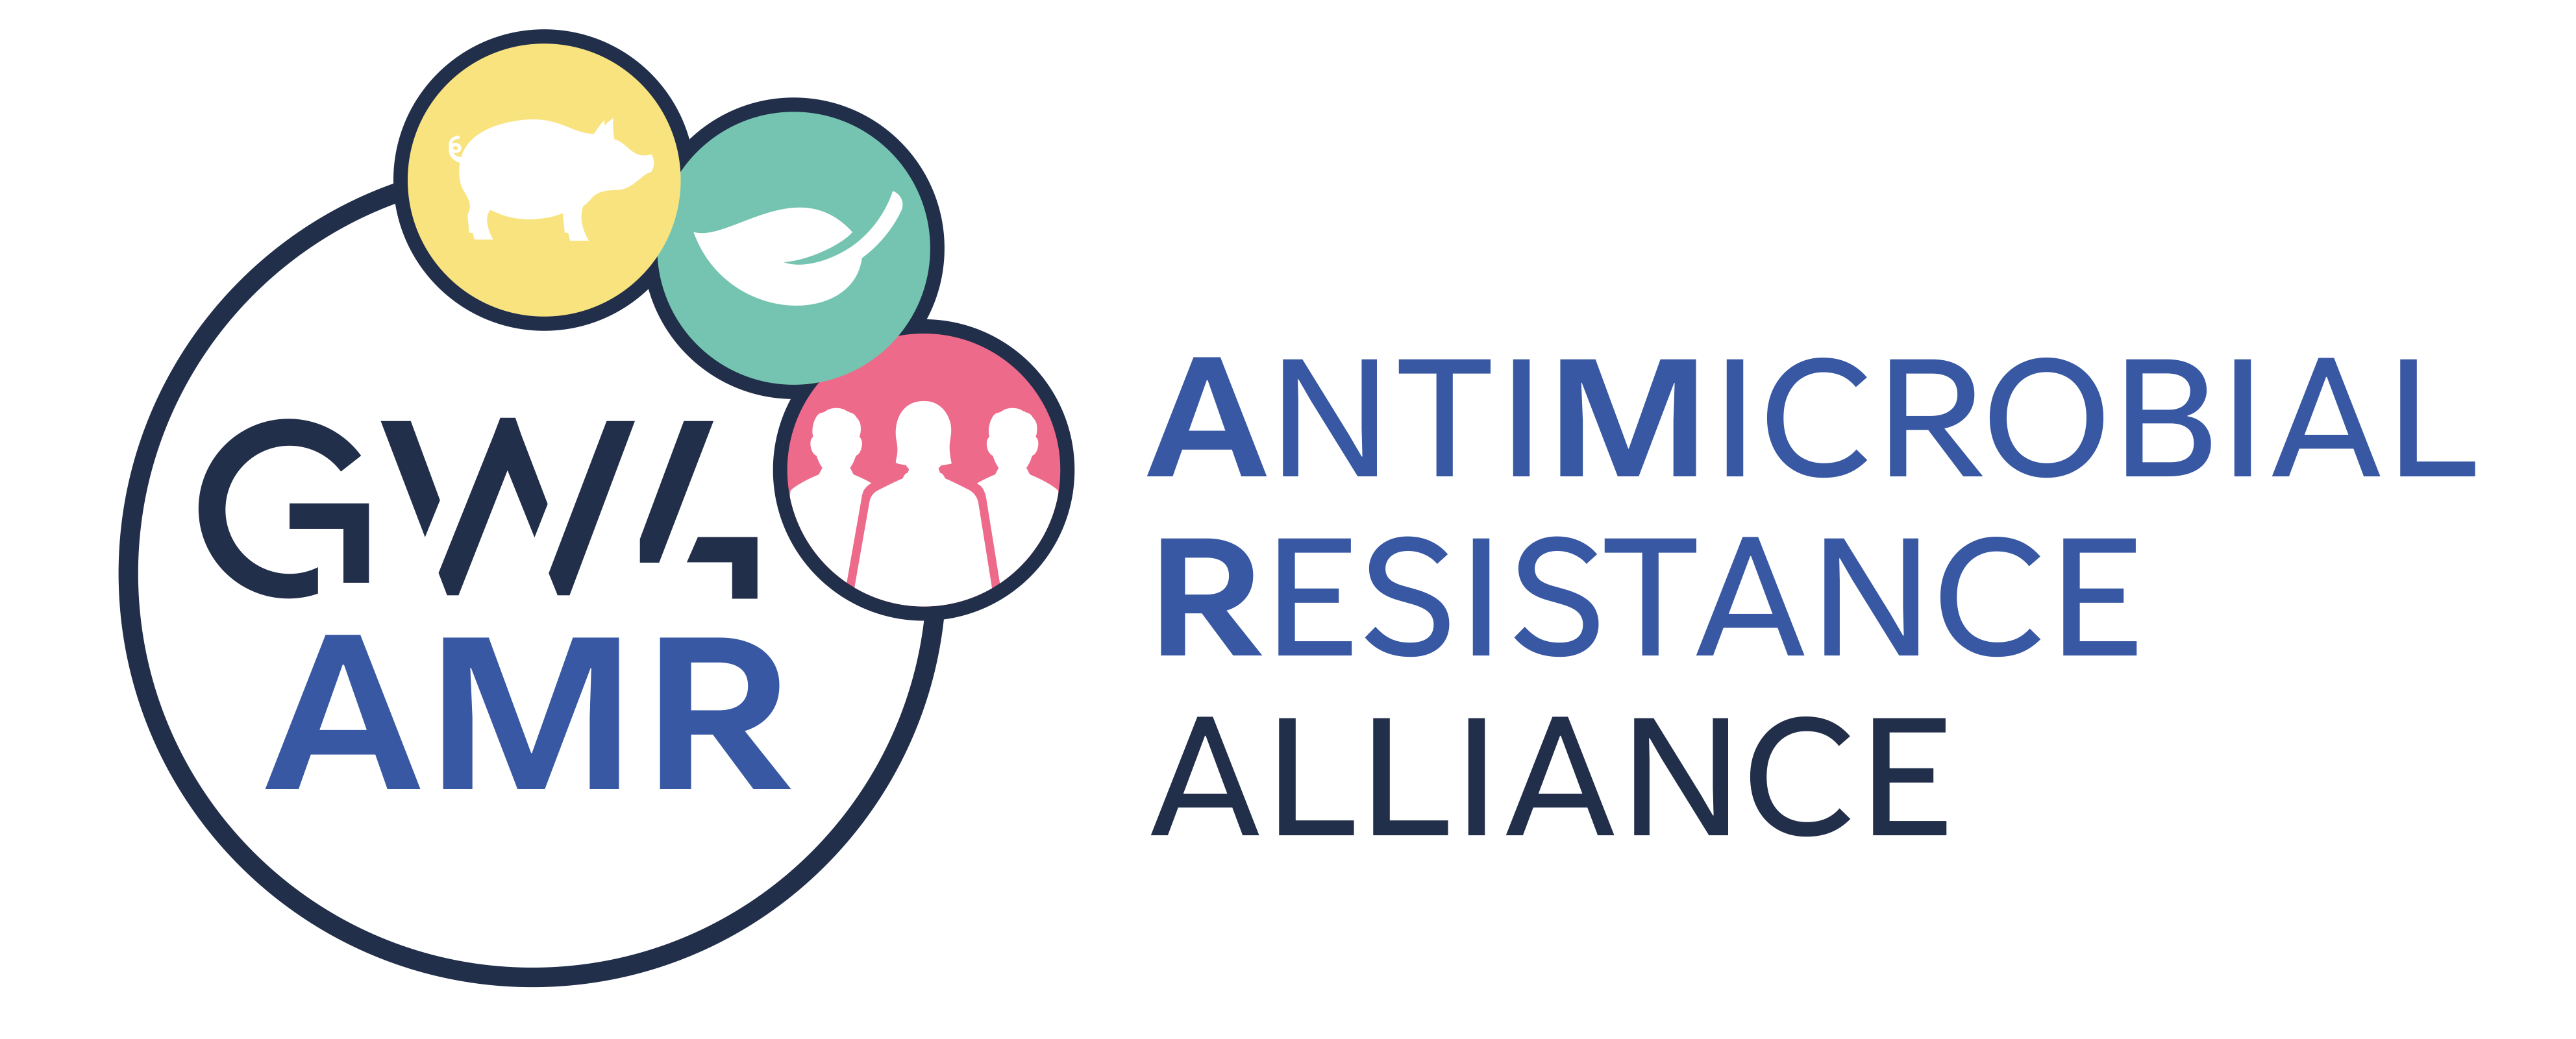 GW4 Antimicrobial Resistance Alliance